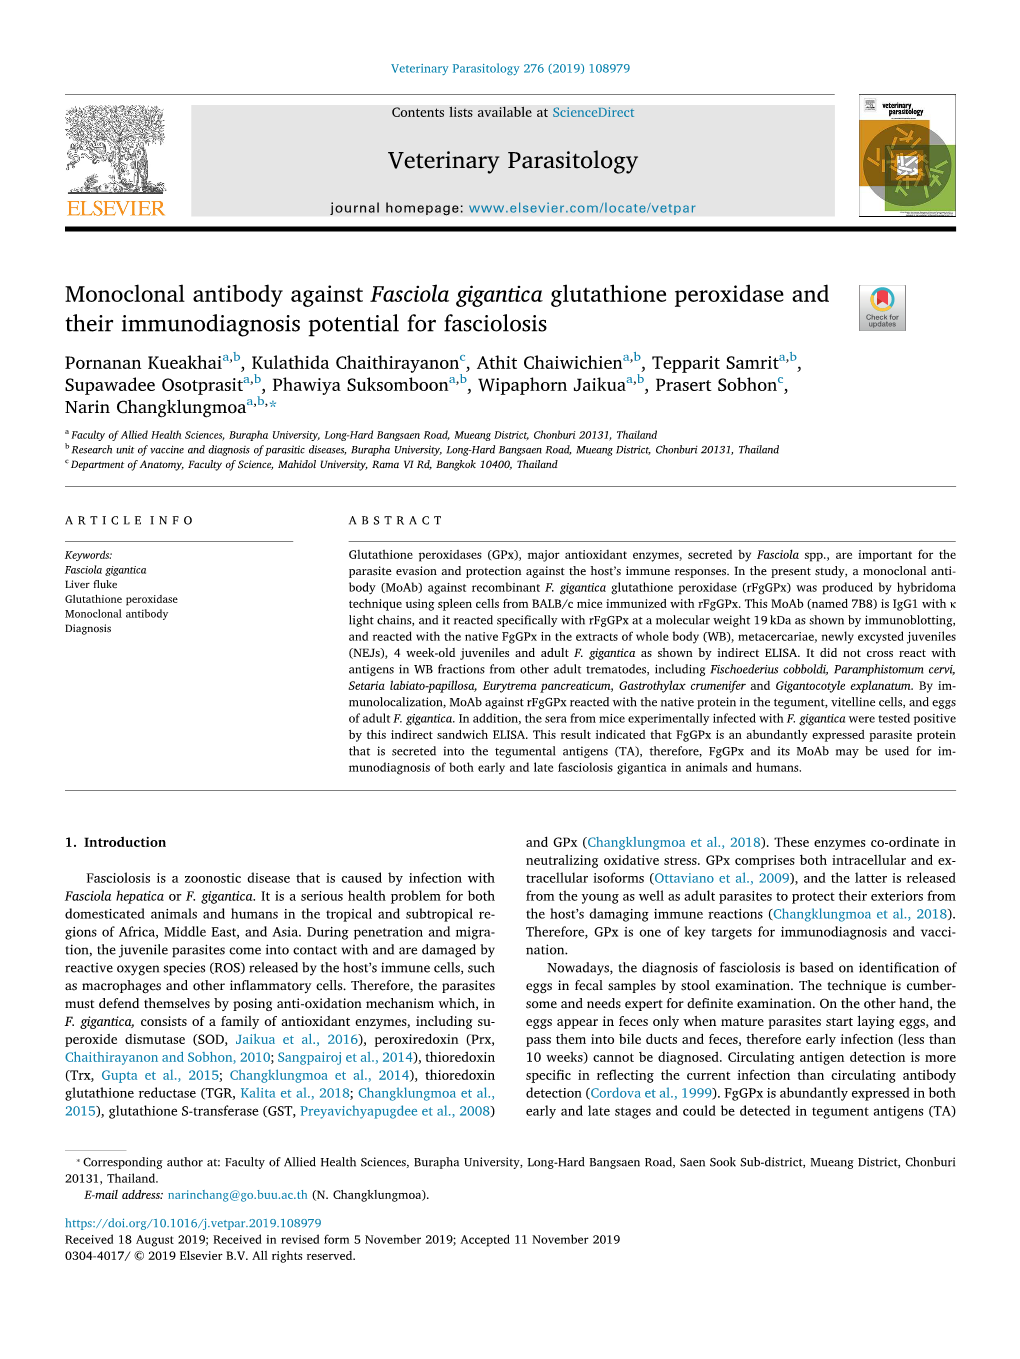 Monoclonal Antibody Against Fasciola Gigantica Glutathione Peroxidase and Their Immunodiagnosis Potential for Fasciolosis